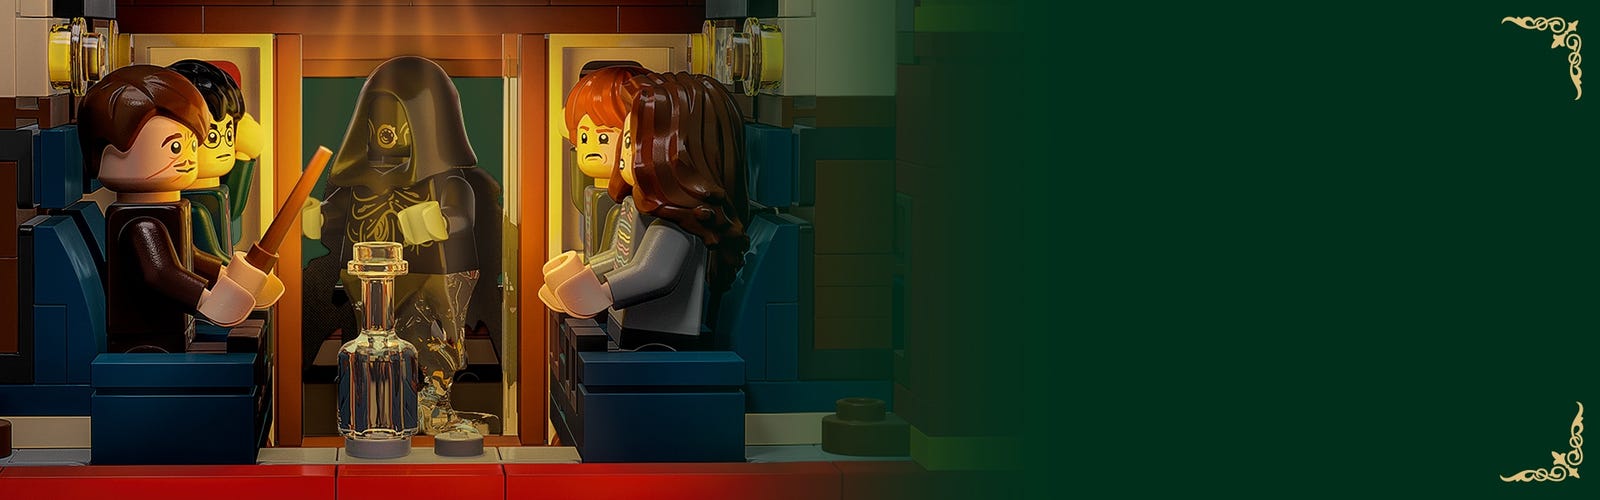 LEGO Harry Potter - Expresso Hogwarts - 76405 - superlegalbrinquedos